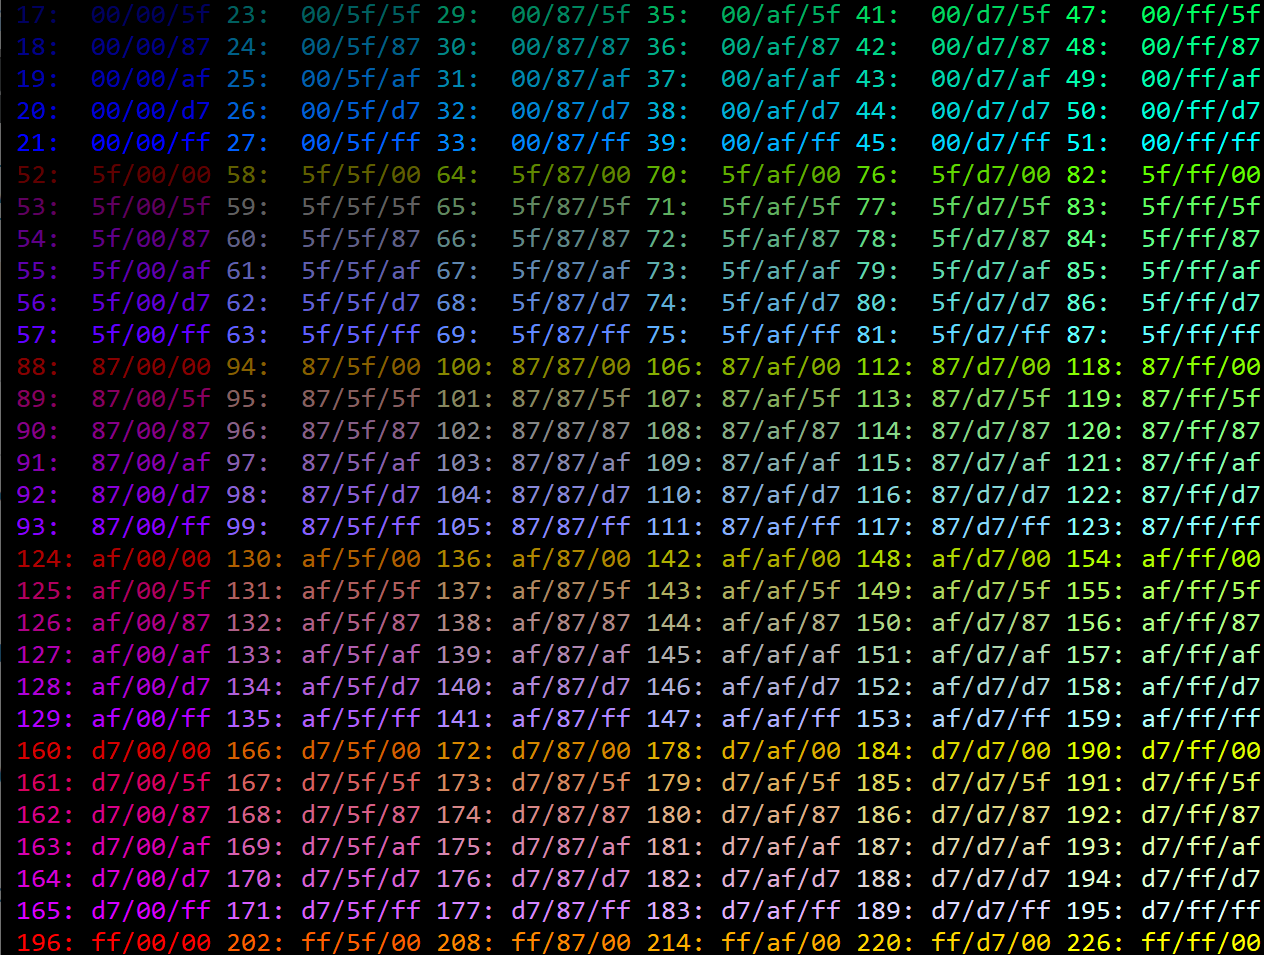 colortest displays color codes